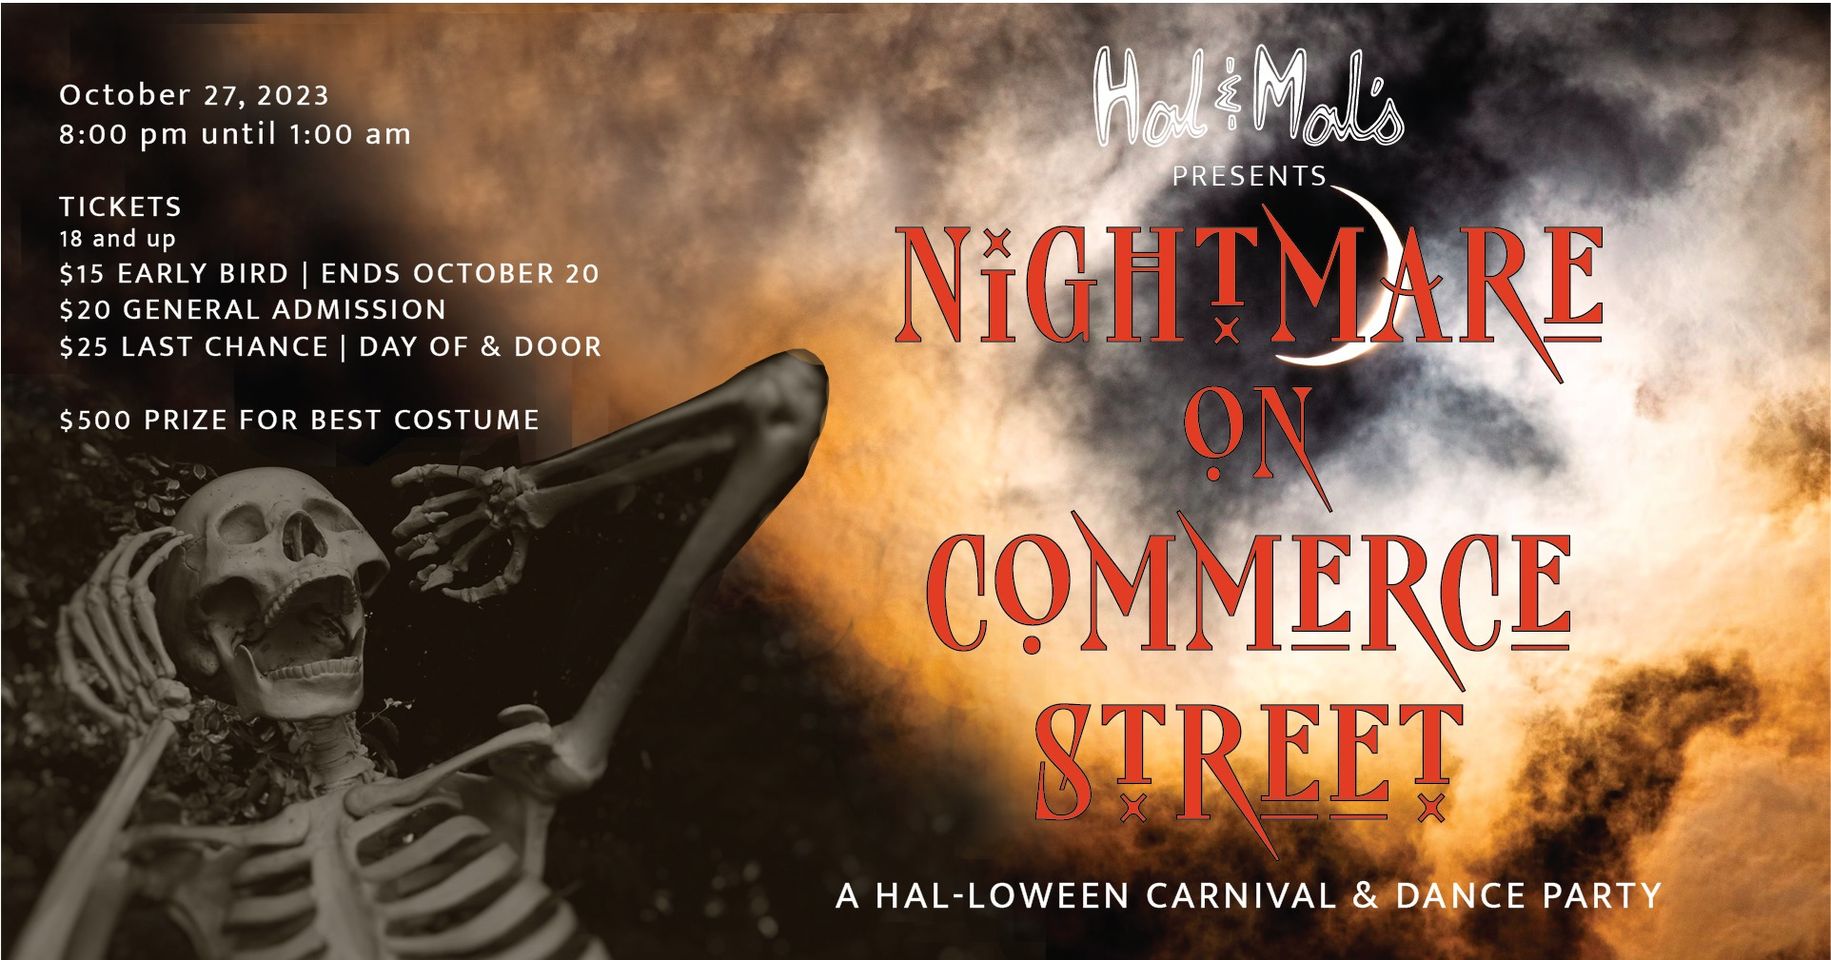 Hal &Mal’s presents Nightmare on Commerce Street | Hal-loween Carnival & Dance Party